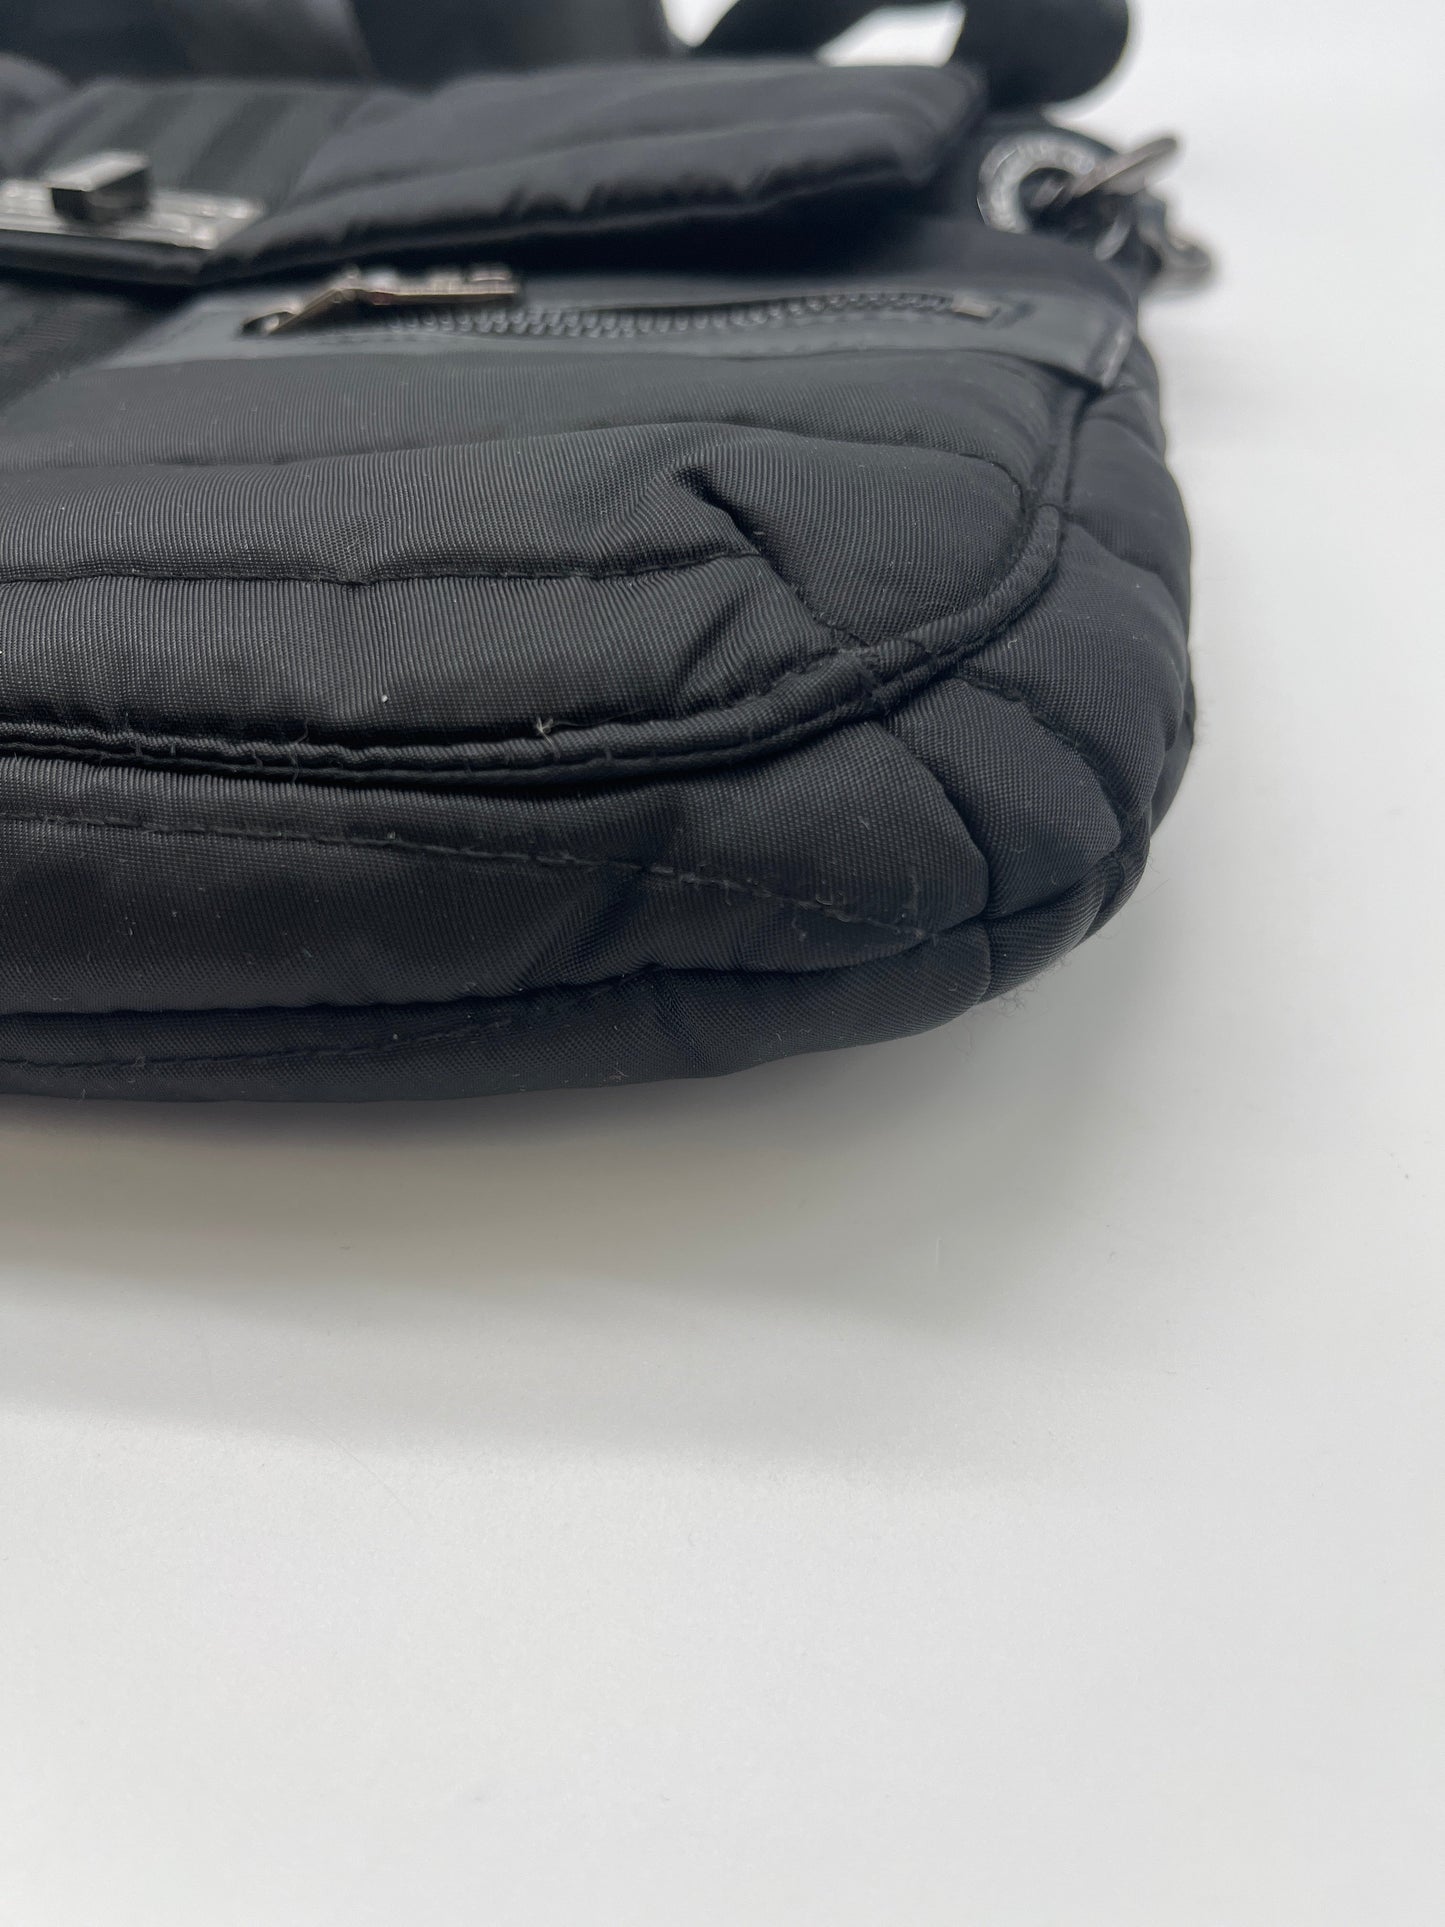 Handbag By Think Royln  Size: Medium